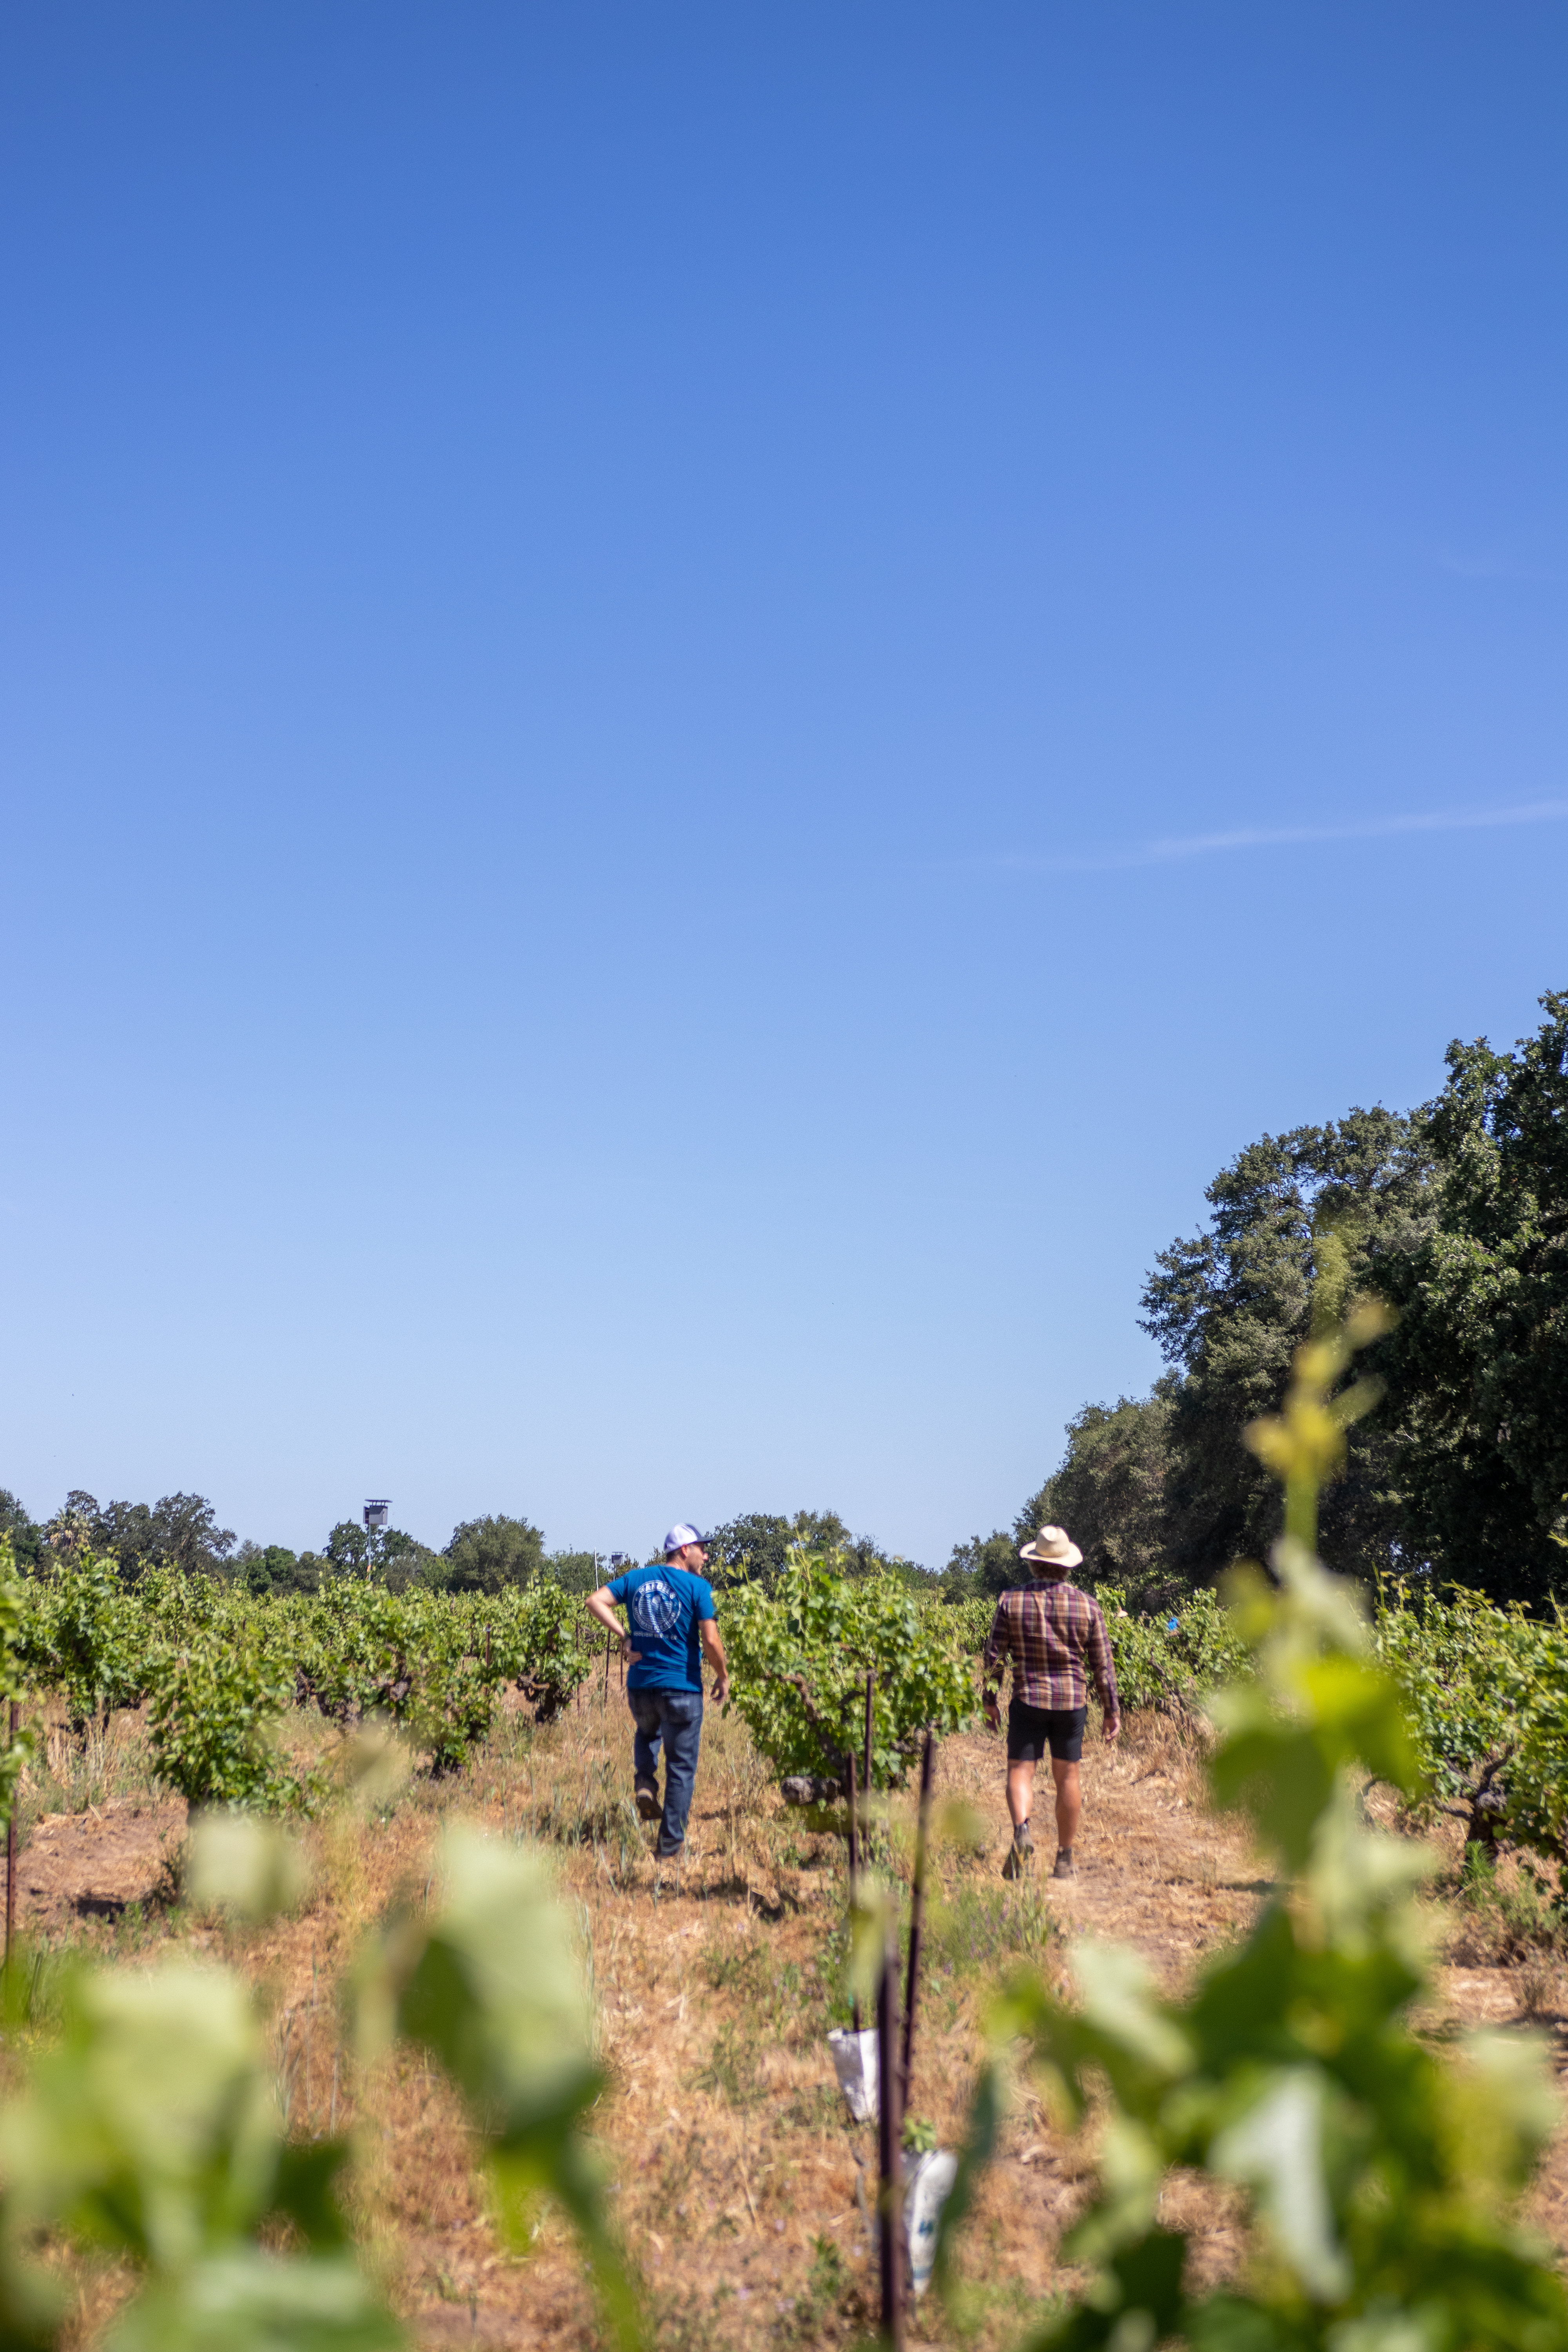 bertus and other man walking in vineyard